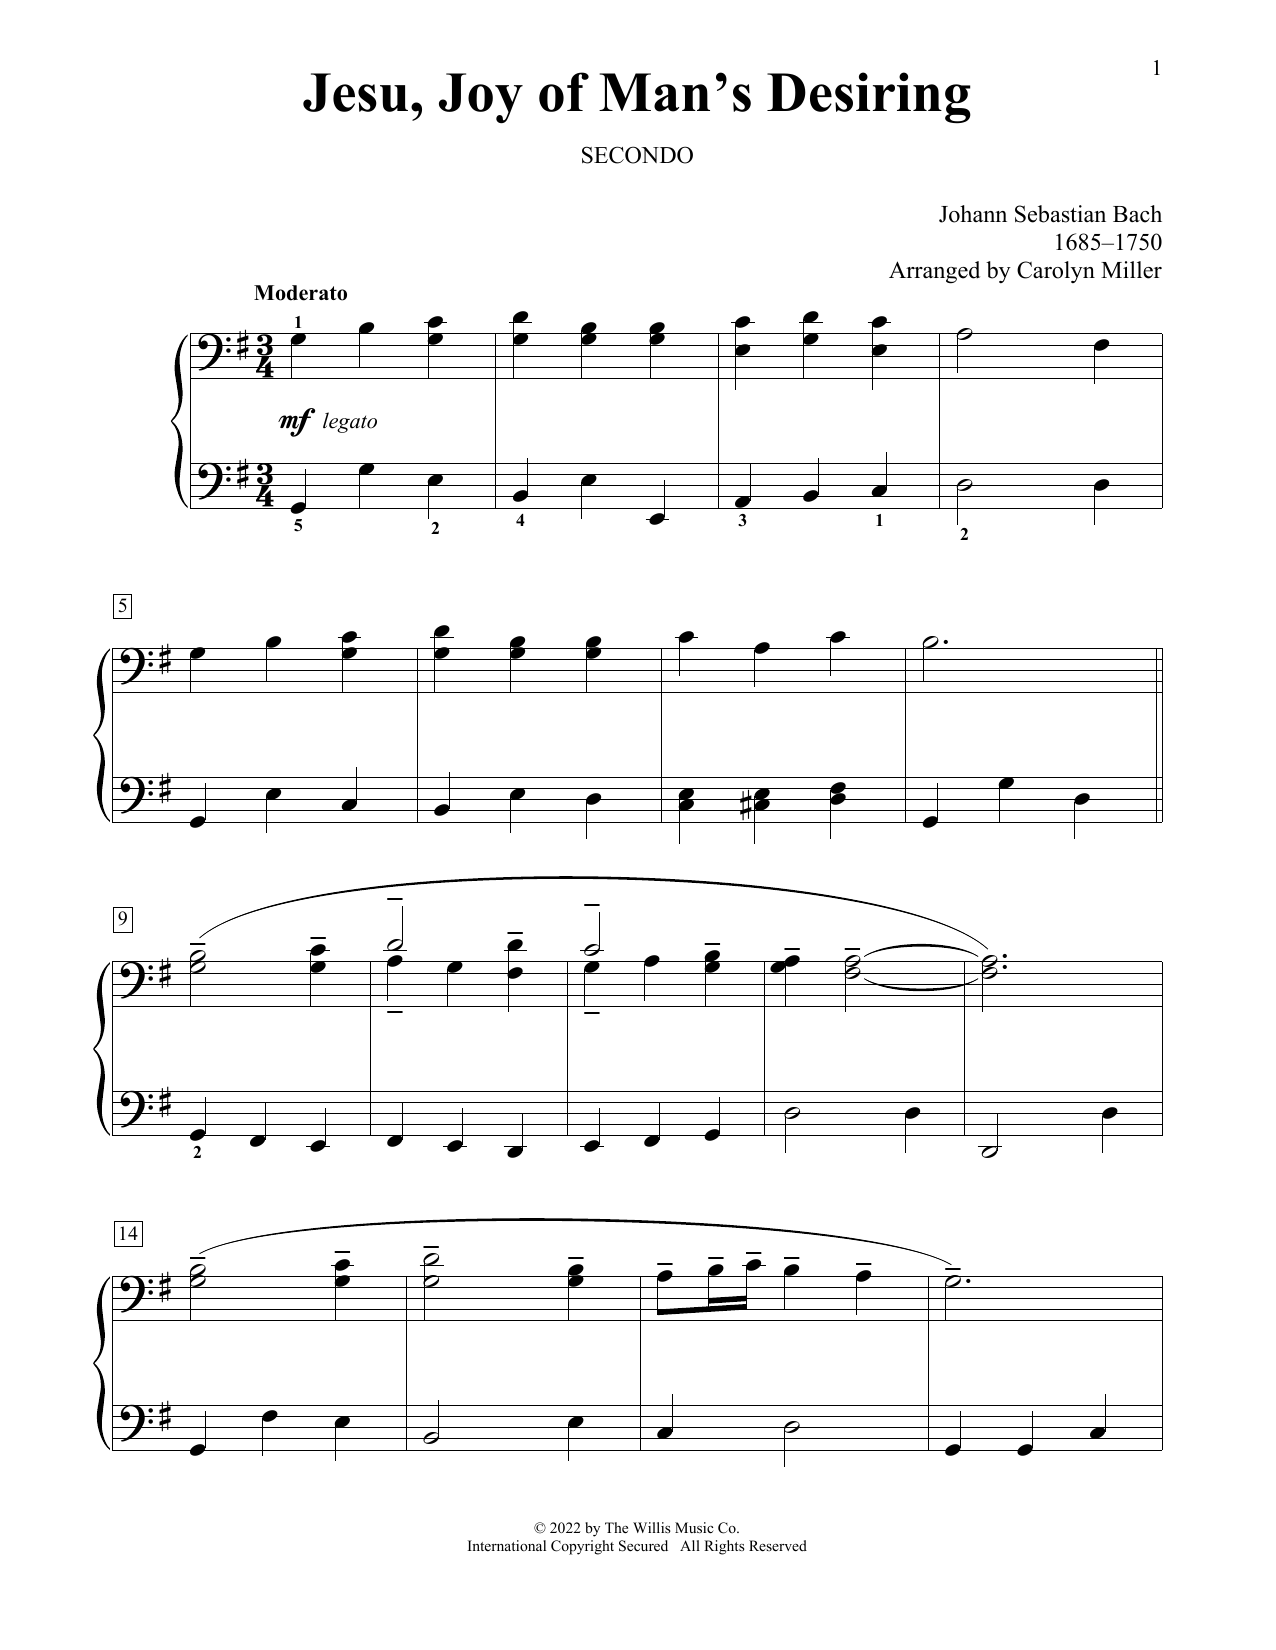 Johann Sebastian Bach Jesu, Joy Of Man's Desiring (arr. Carolyn Miller) Sheet Music Notes & Chords for Piano Duet - Download or Print PDF